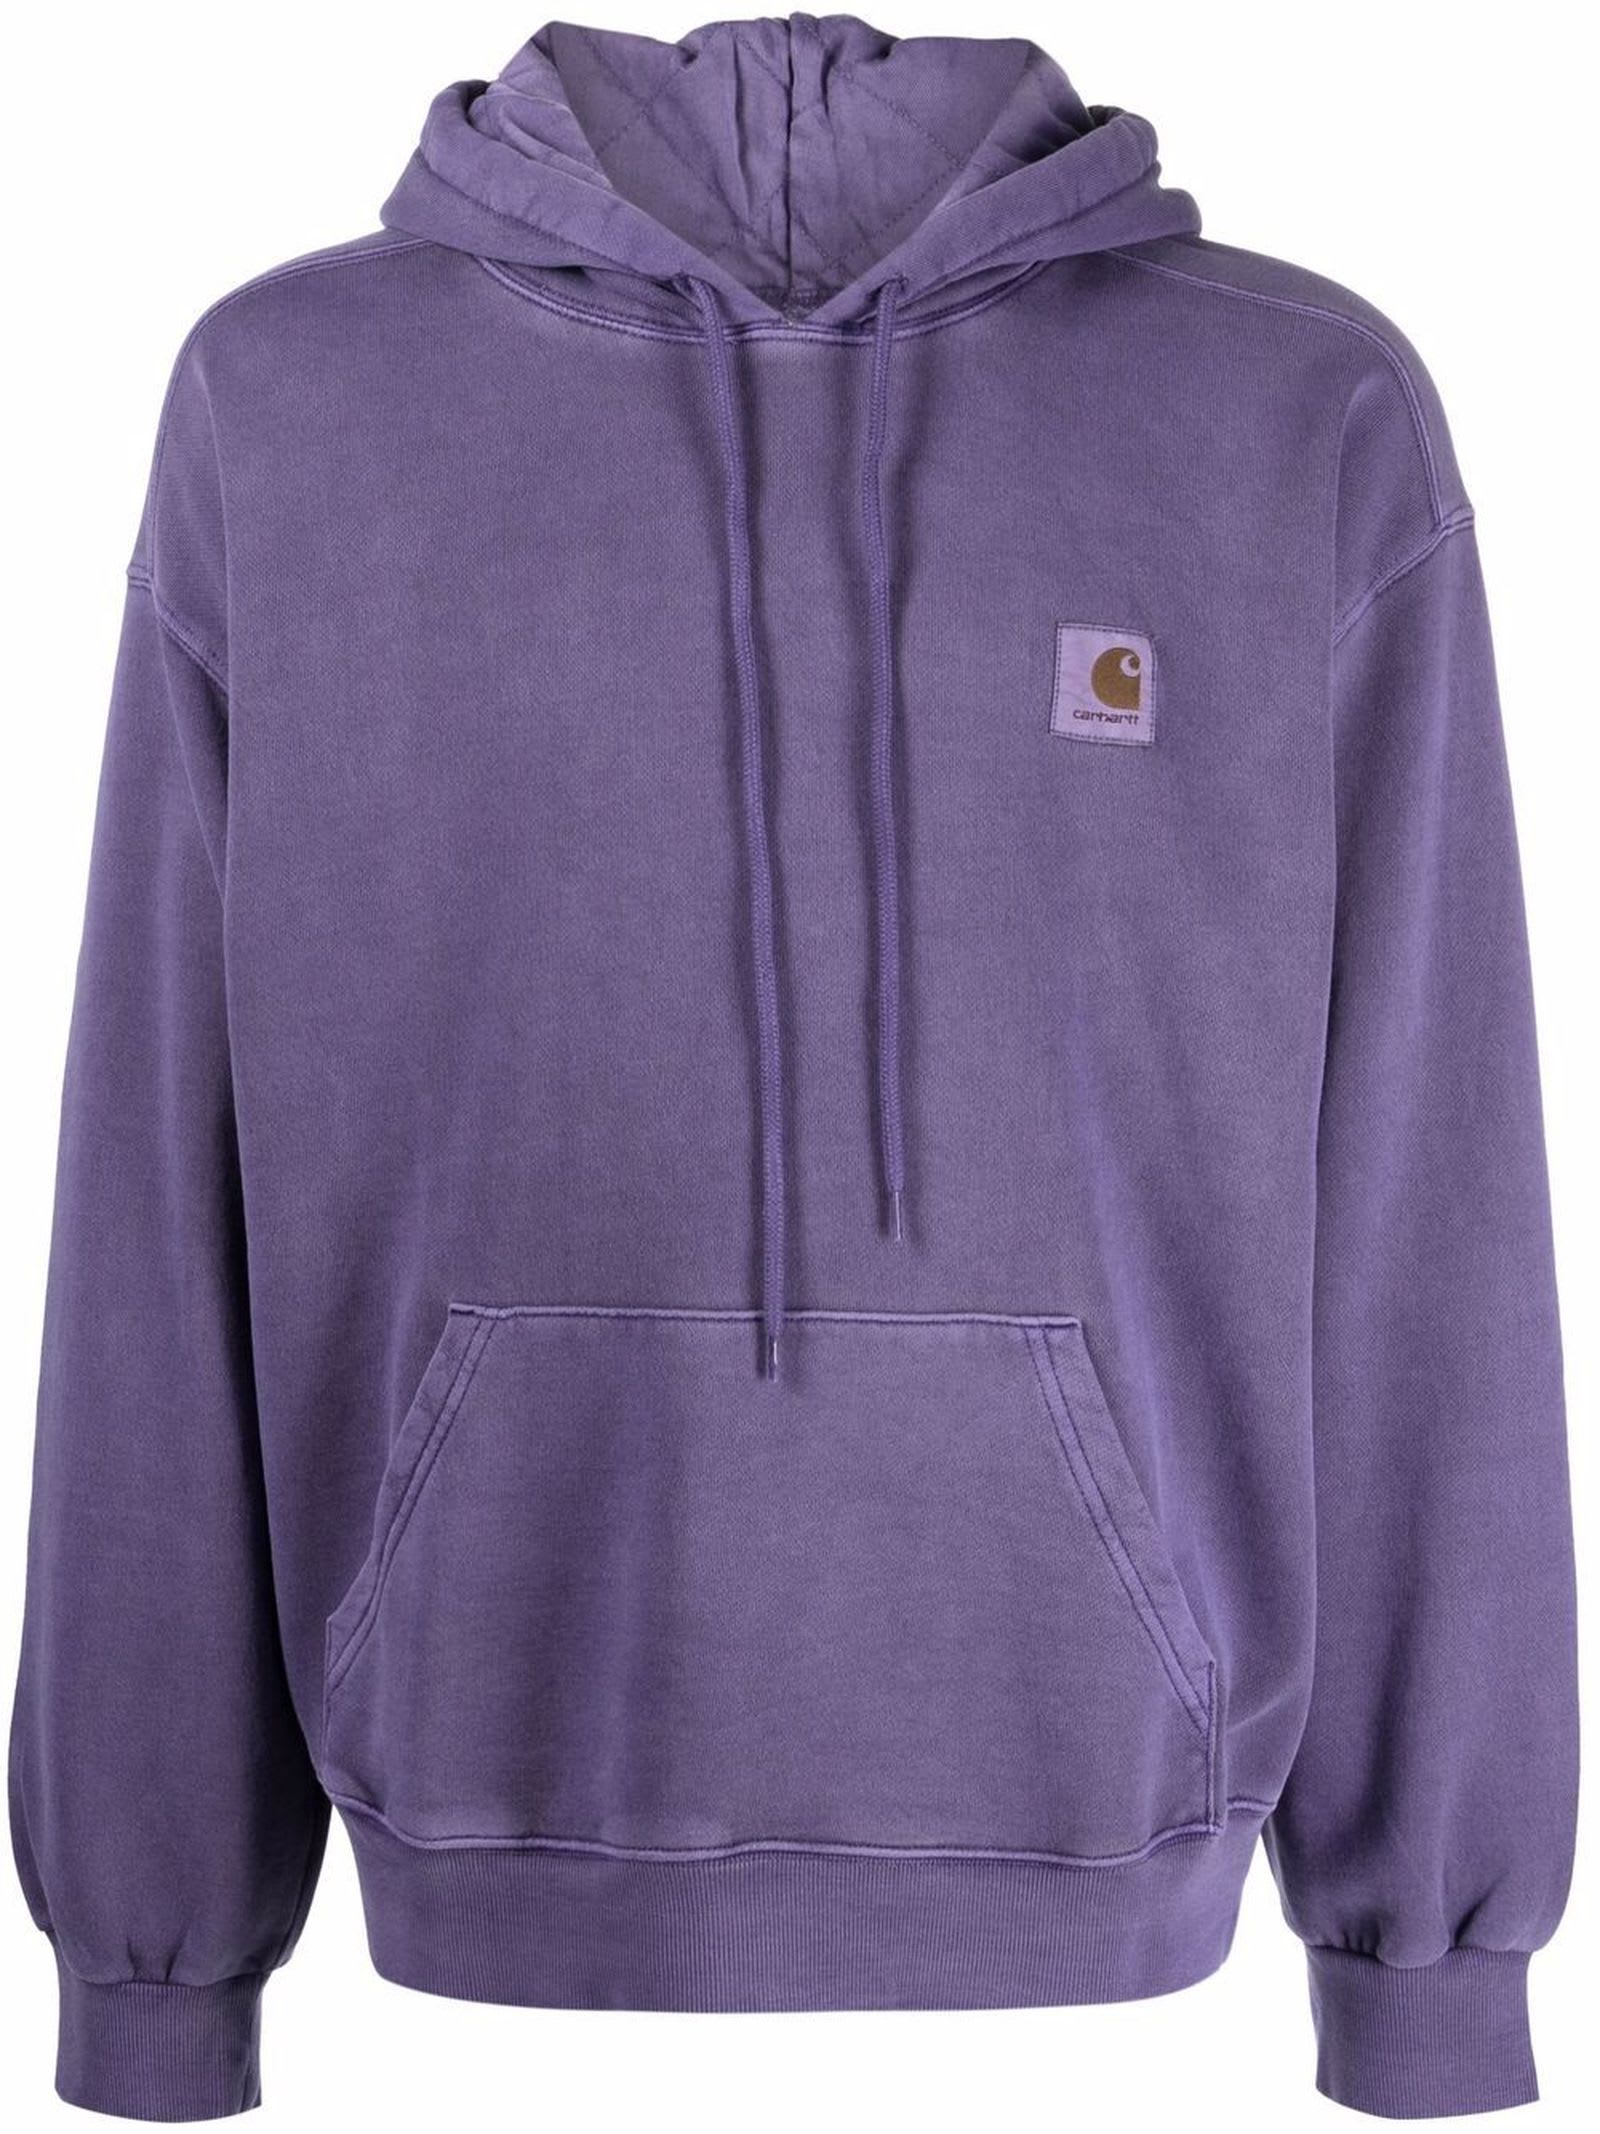 Carhartt Purple Cotton Hoodie